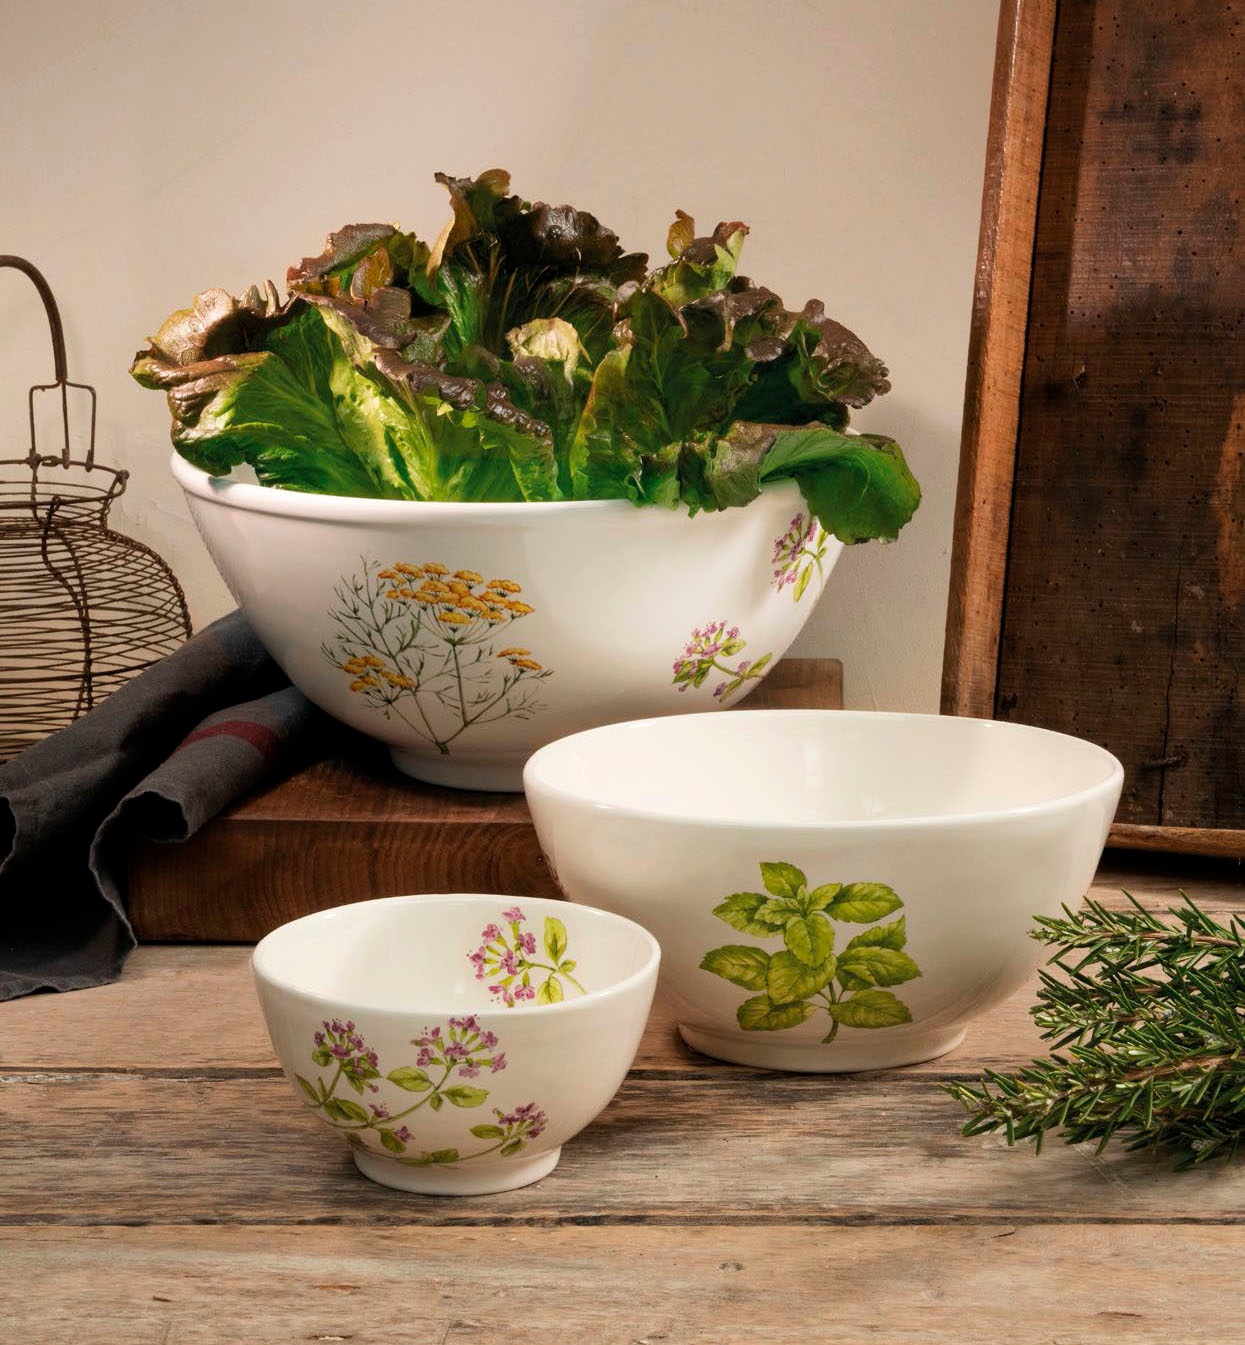 Новая коллекция керамической посуды Rosemary бренда Nuova Cer